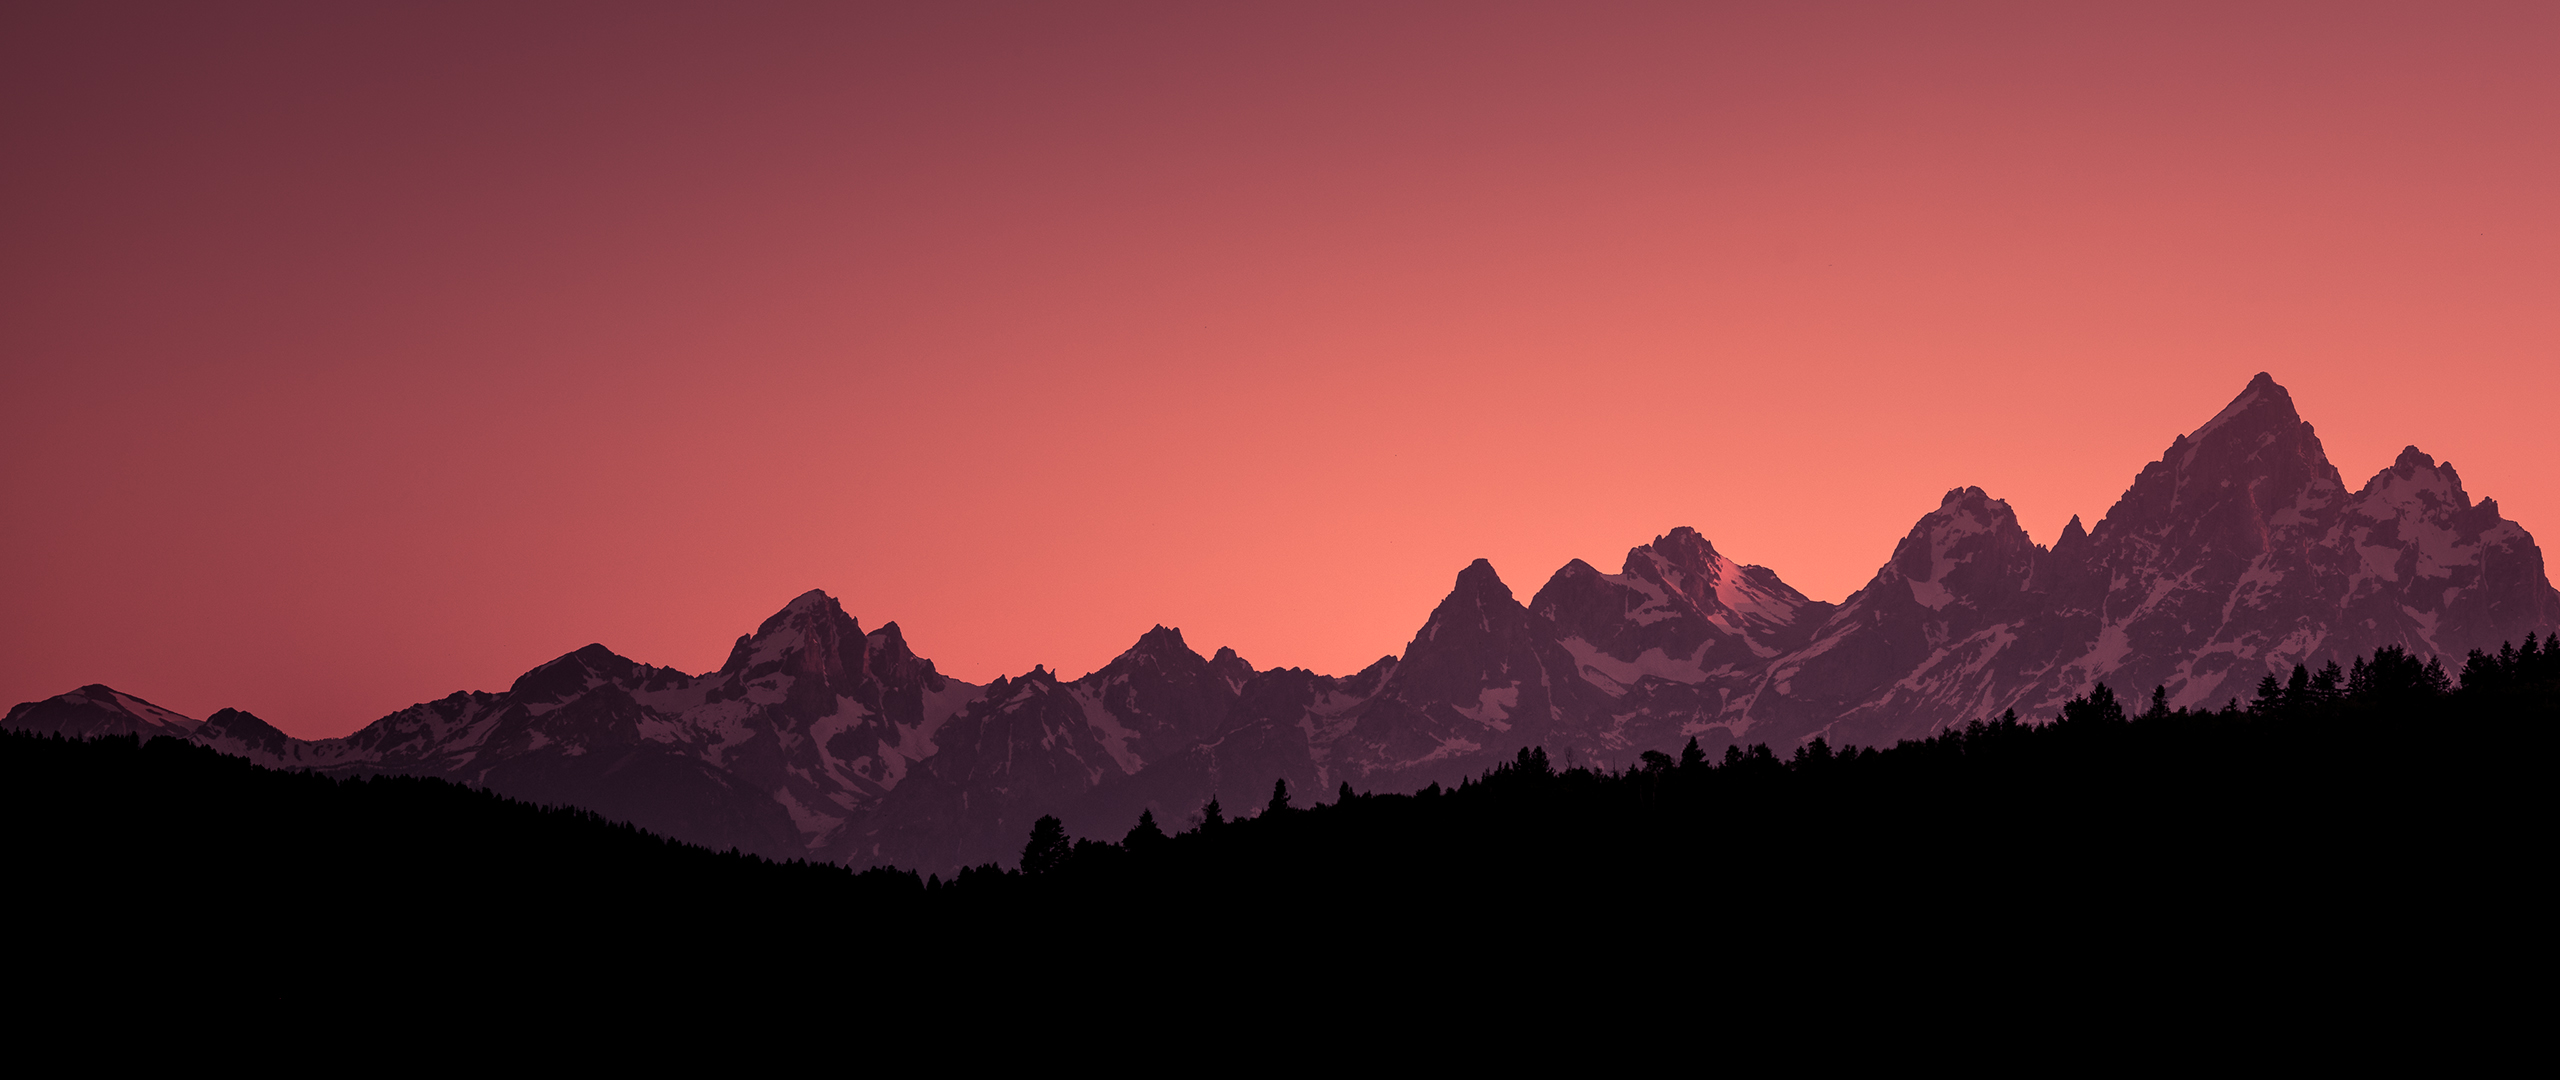 Grand Teton National Park Sunset Mountains Landscape Purple Sky 2560x1080